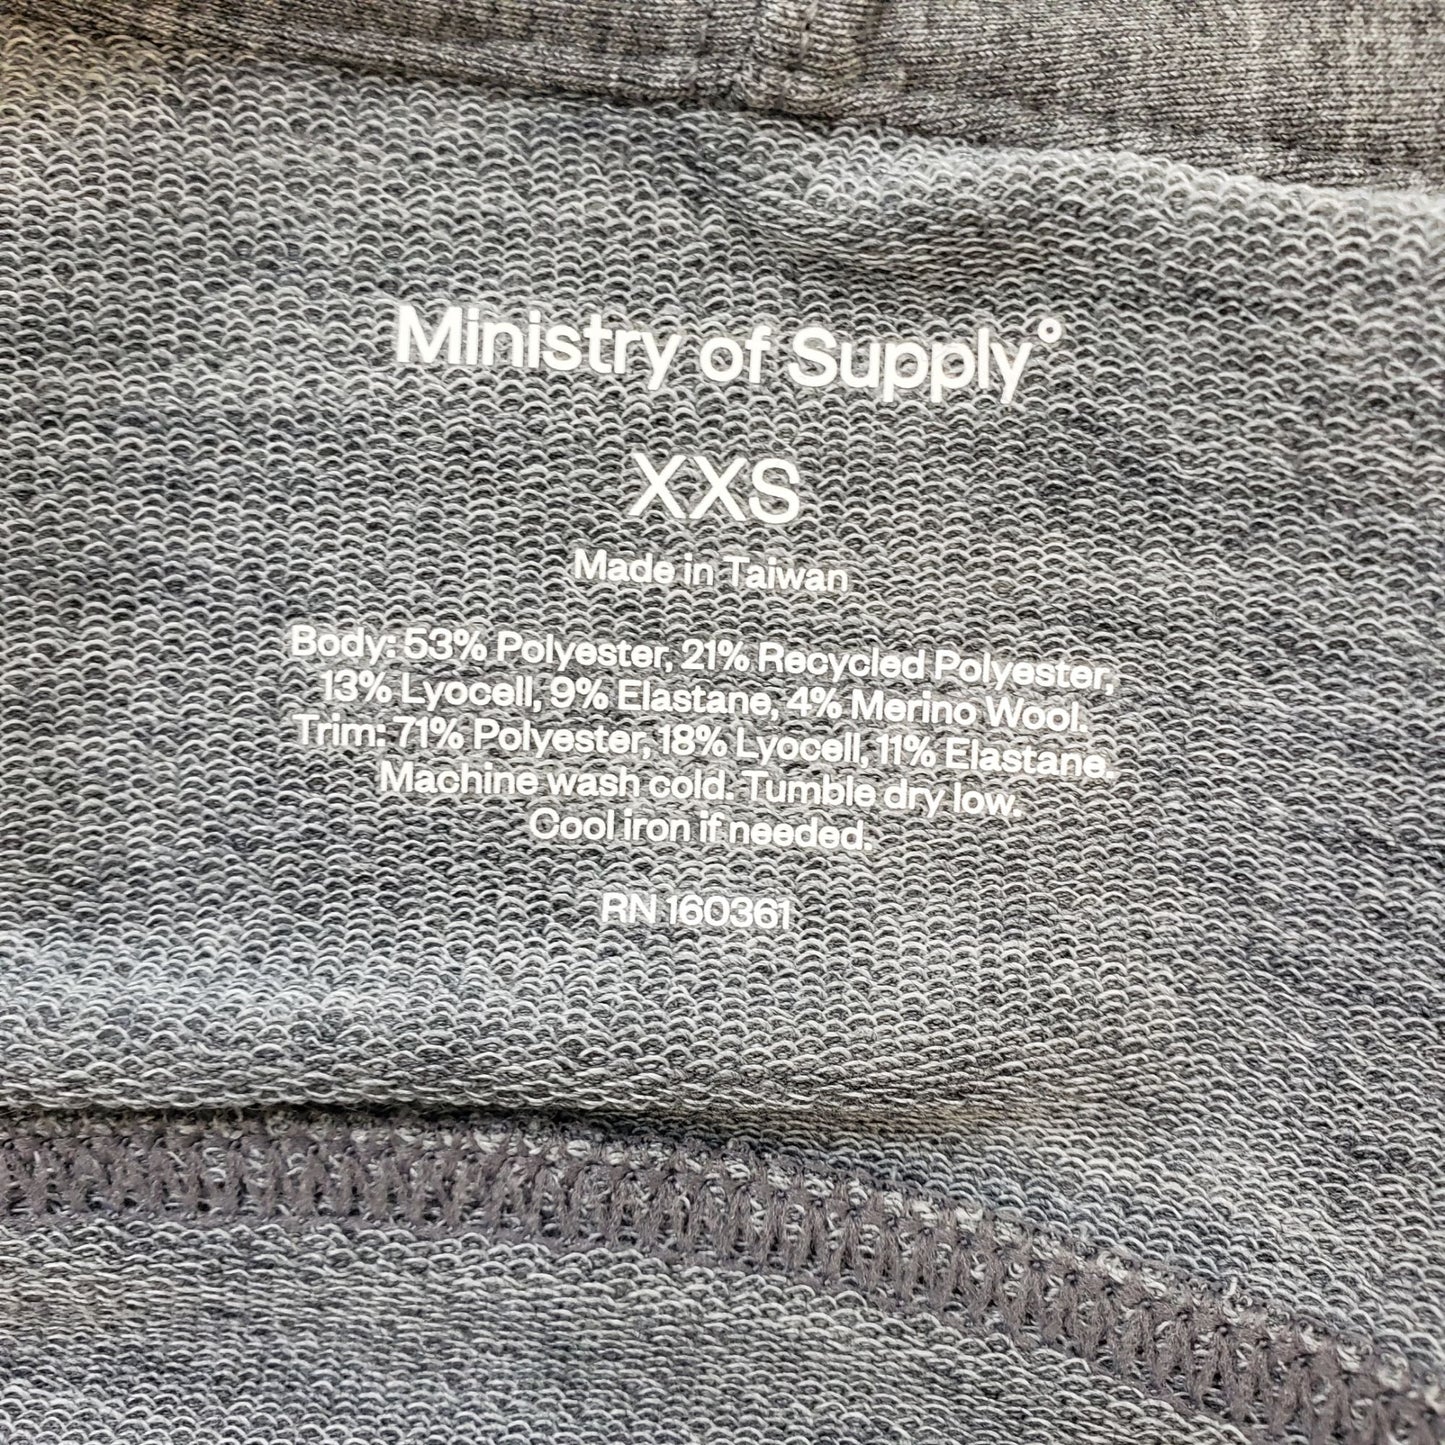 NWT Ministry of Supply Oversized Fusion Terry Cardigan Sweatshirt Size XXS